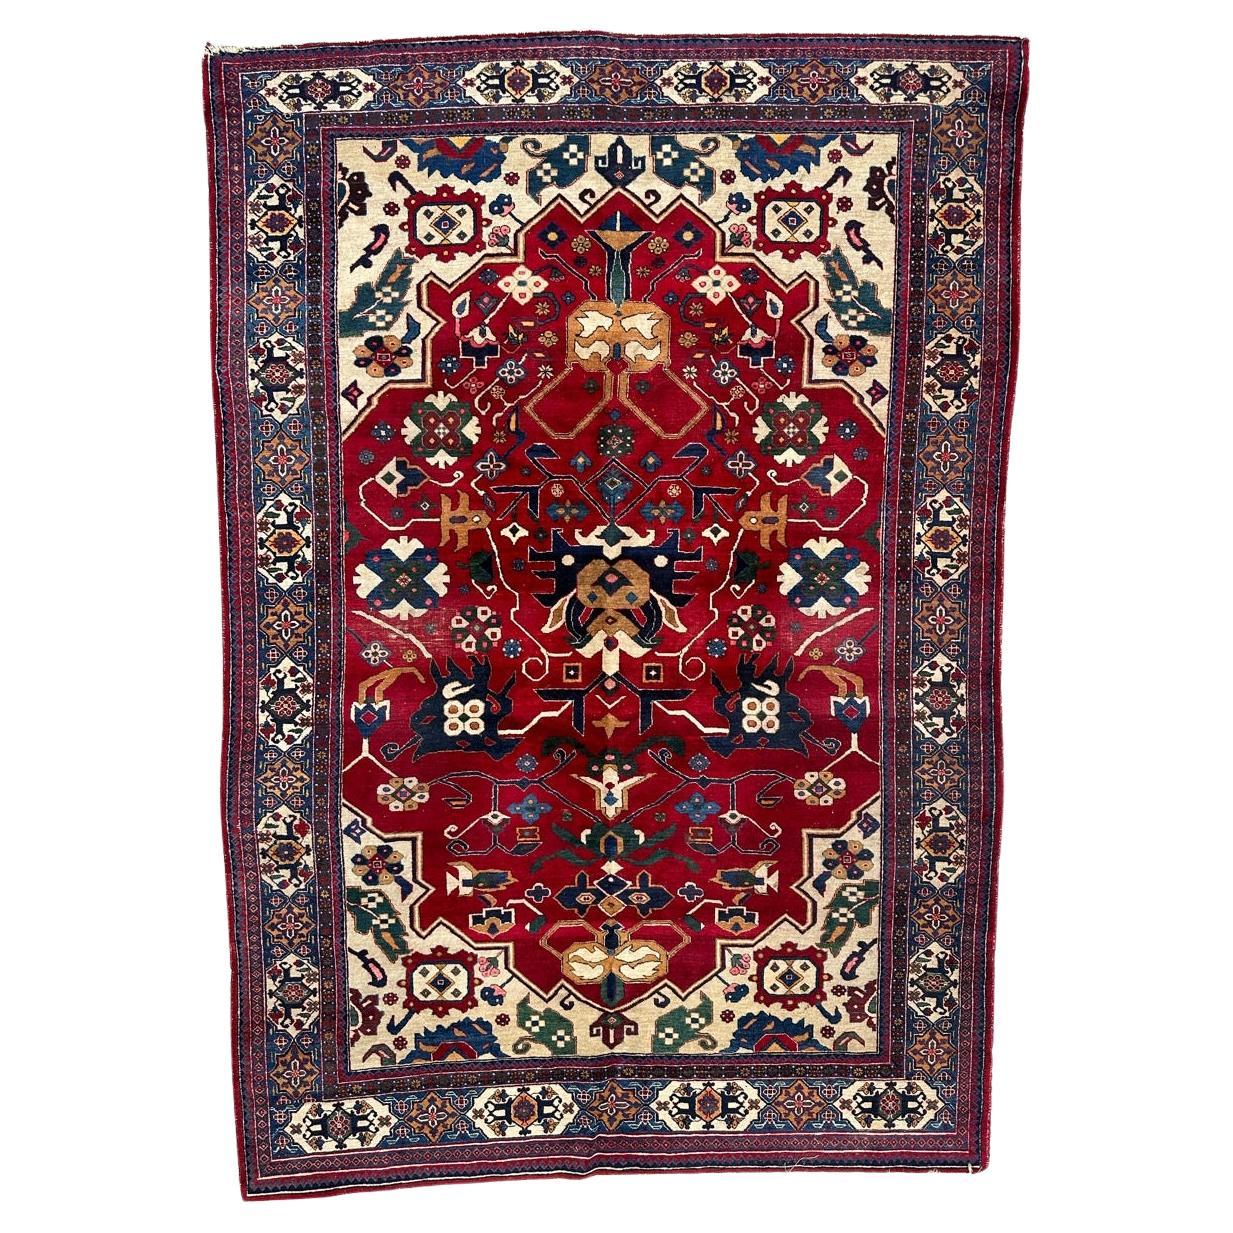 Bobyrug’s pretty mid century Azerbaijan rug